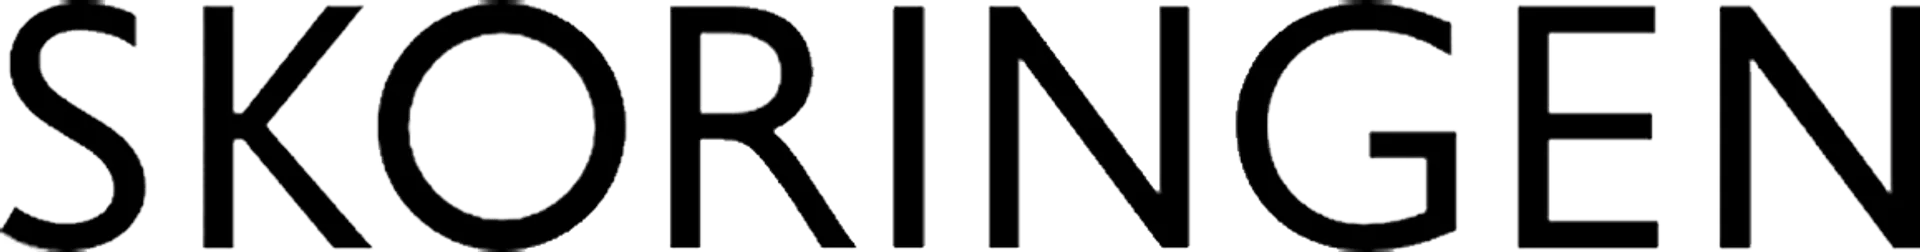 SKORINGEN logo